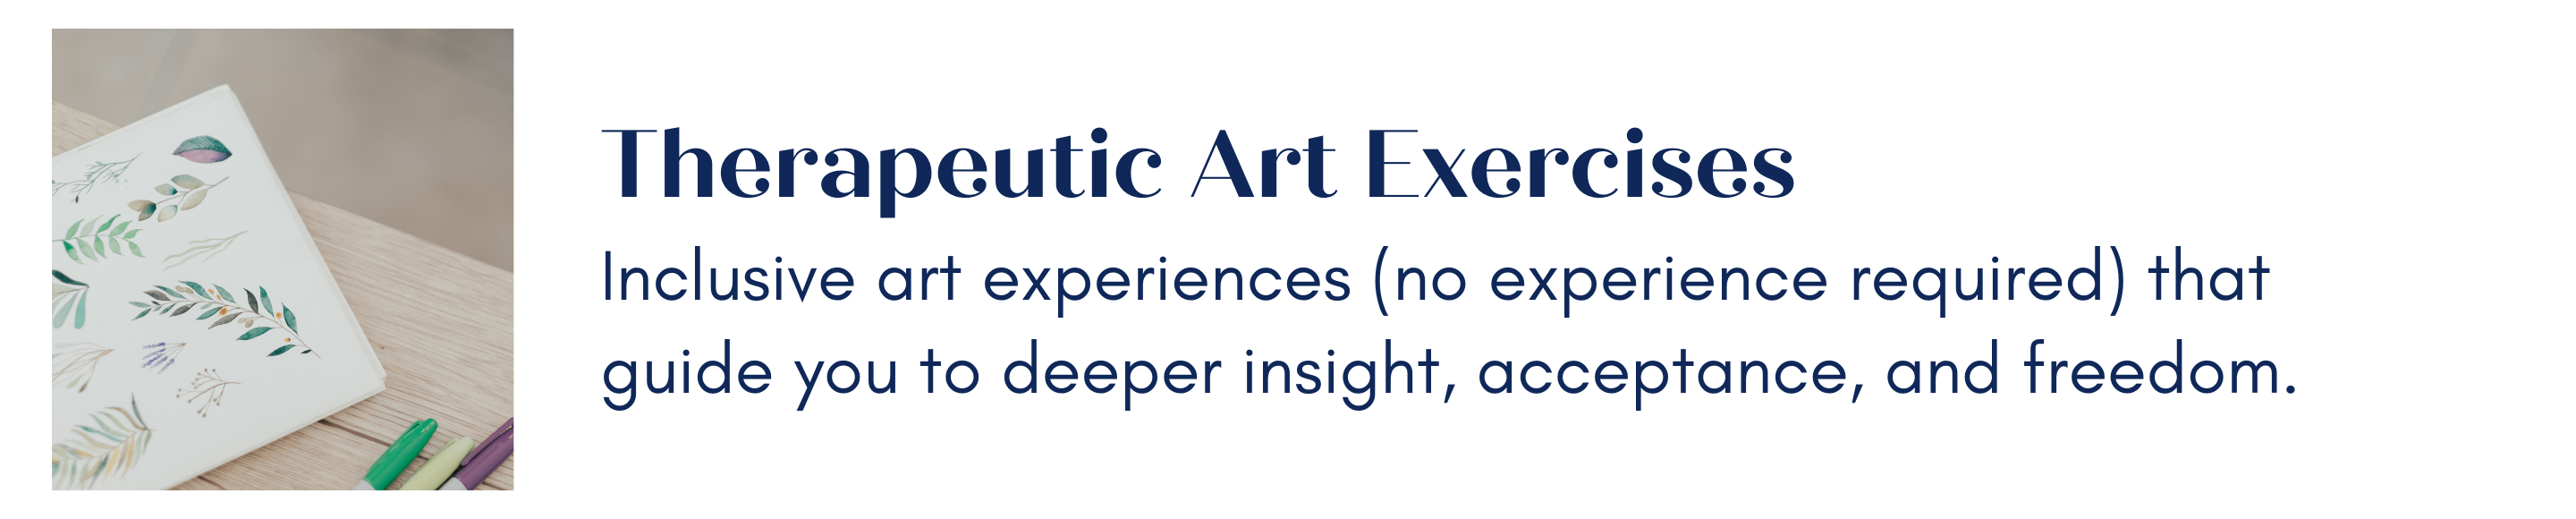 Therapeutic Art Exercises